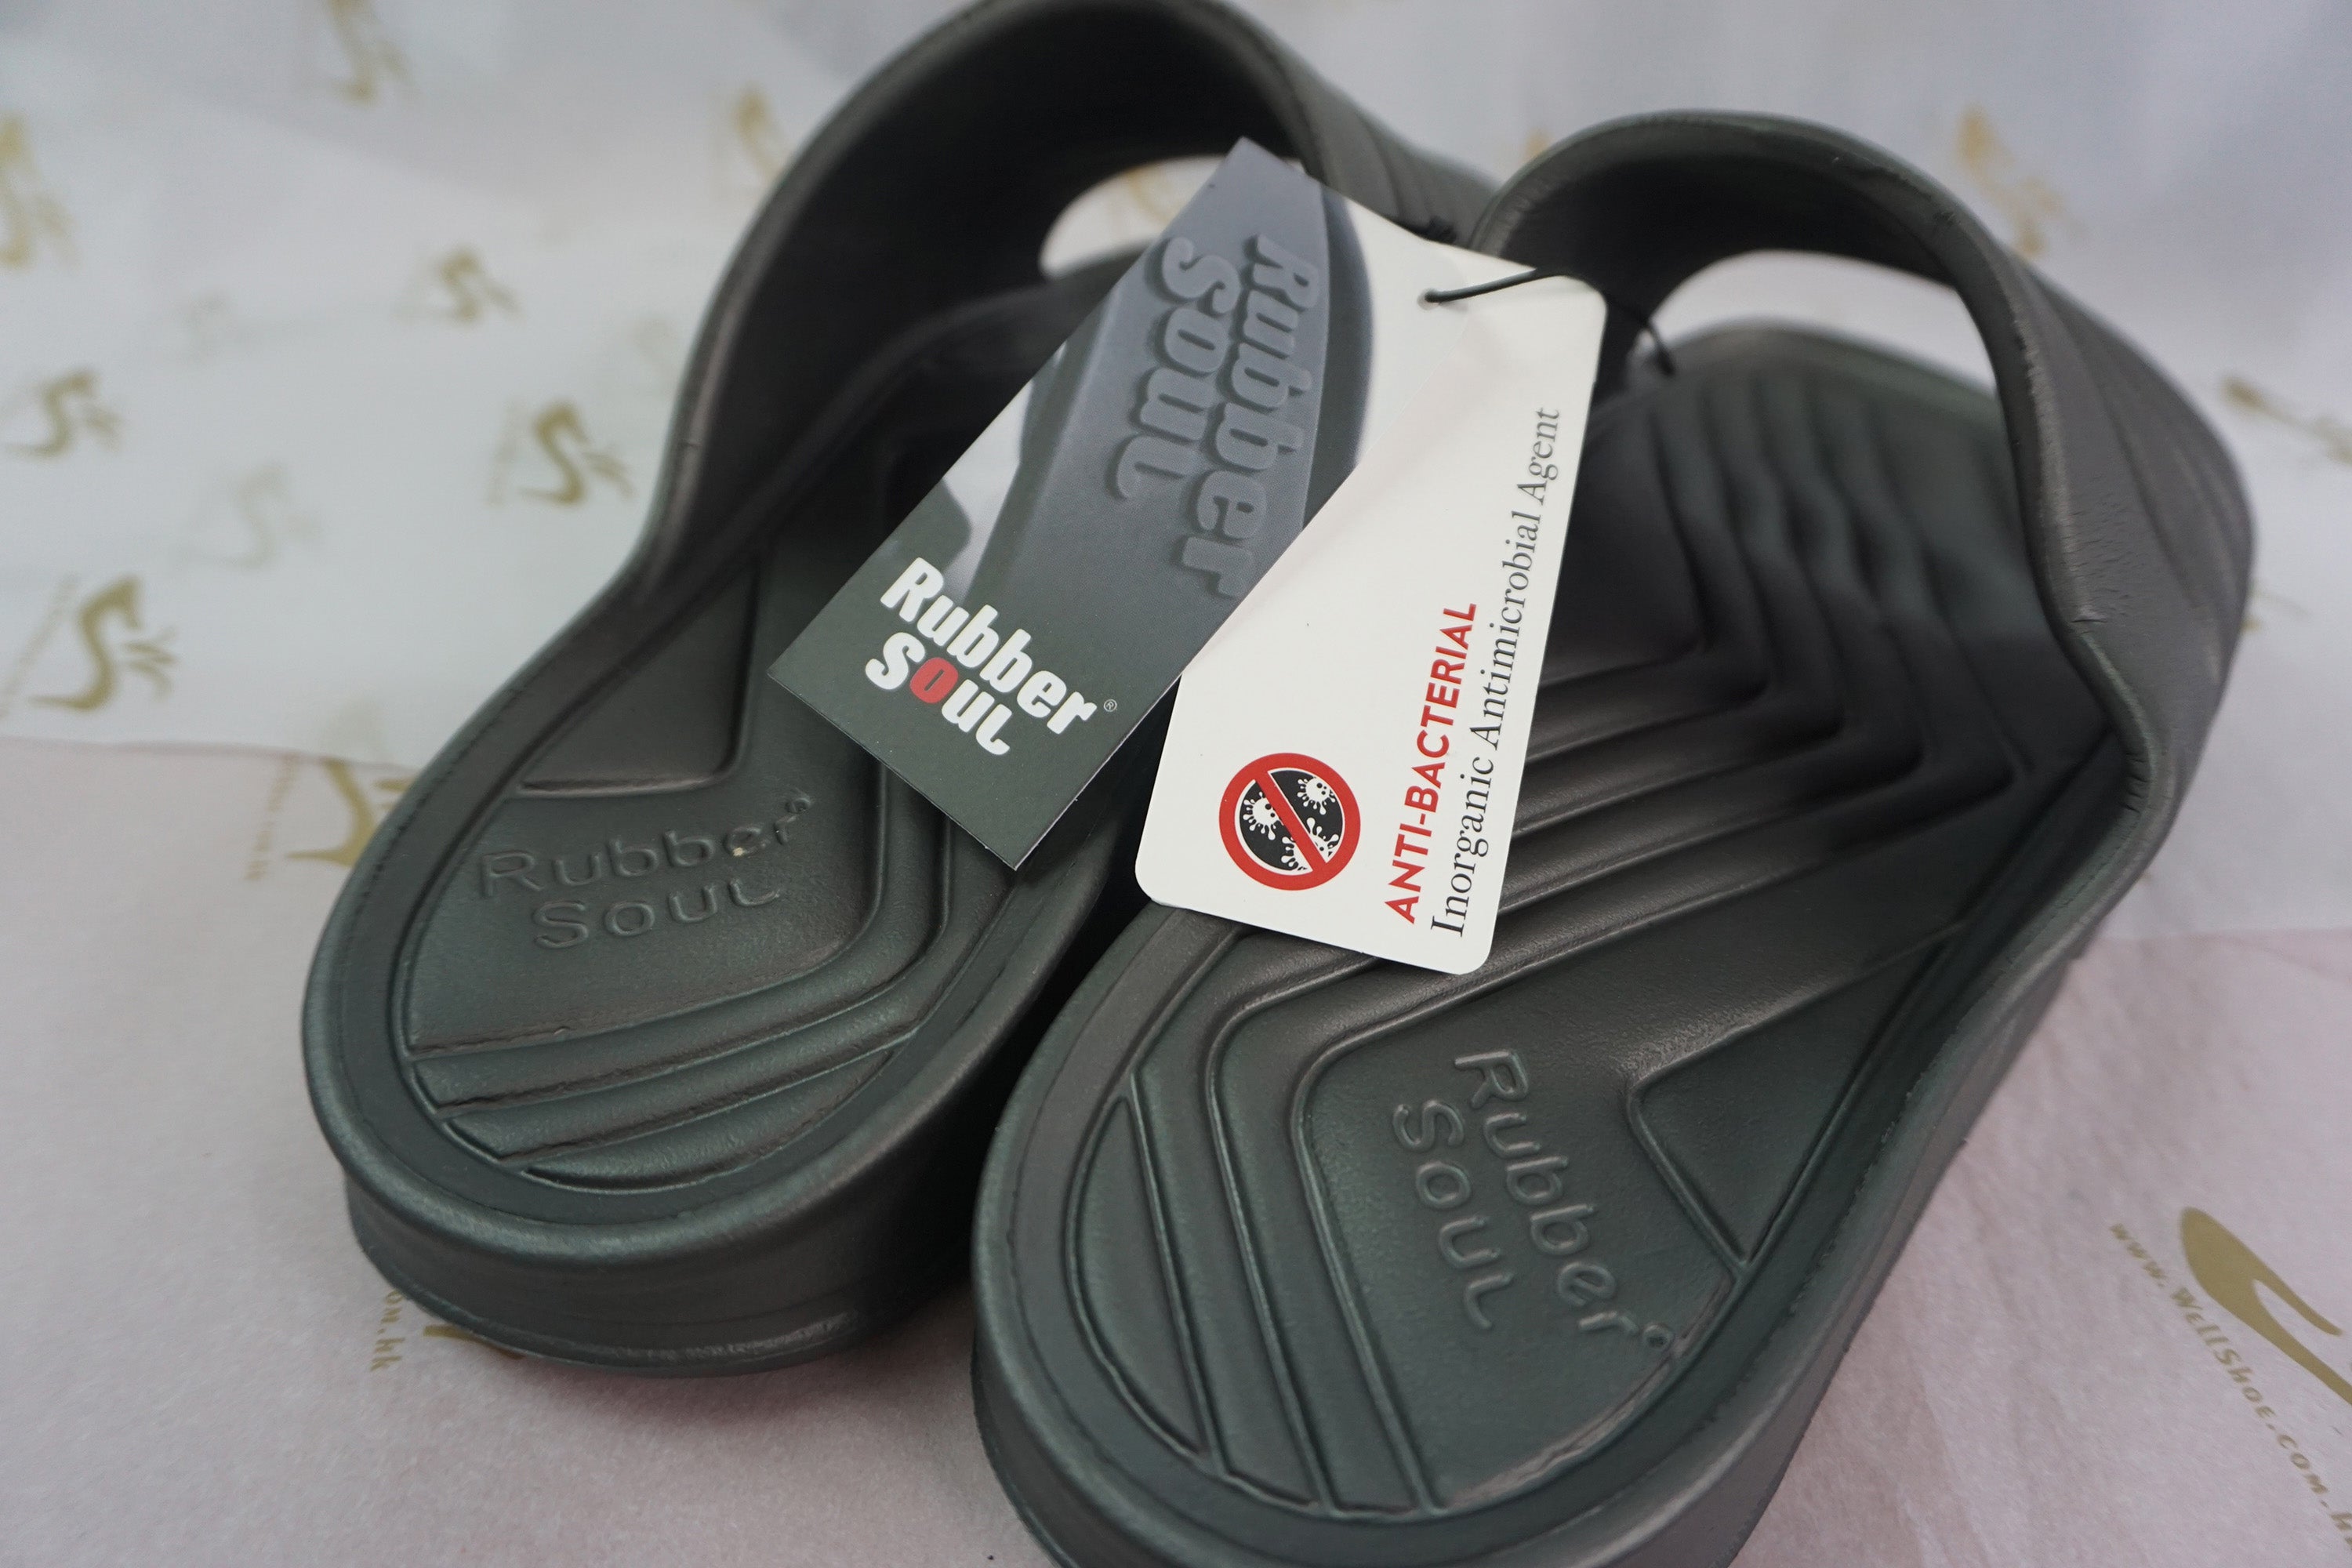 T3328 Casual Sandals (Thailand Made)-FLEX-GY-US Size: 10-偉豐鞋 WELL SHOE HK-Well Shoe-偉豐鞋-偉豐網-荃灣鞋店-Functional shoes-Hong Kong Tsuen Wan Shoe Store-Tai Wan Shoe-Japan Shoe-高品質功能鞋-台灣進口鞋-日本進口鞋-High-quality shoes-鞋類配件-荃灣進口鞋-香港鞋店-優質鞋類產品-水靴-帆布鞋-廚師鞋-香港鞋品牌-Hong Kong Shoes brand-長者鞋-Hong Kong Rain Boots-Kitchen shoes-Cruthes-Slipper-Well Shoe Hong Kong-Anello-Arriba-休閒鞋-舒適鞋-健康鞋-皮鞋-Healthy shoes-Leather shoes-Hiking shoes